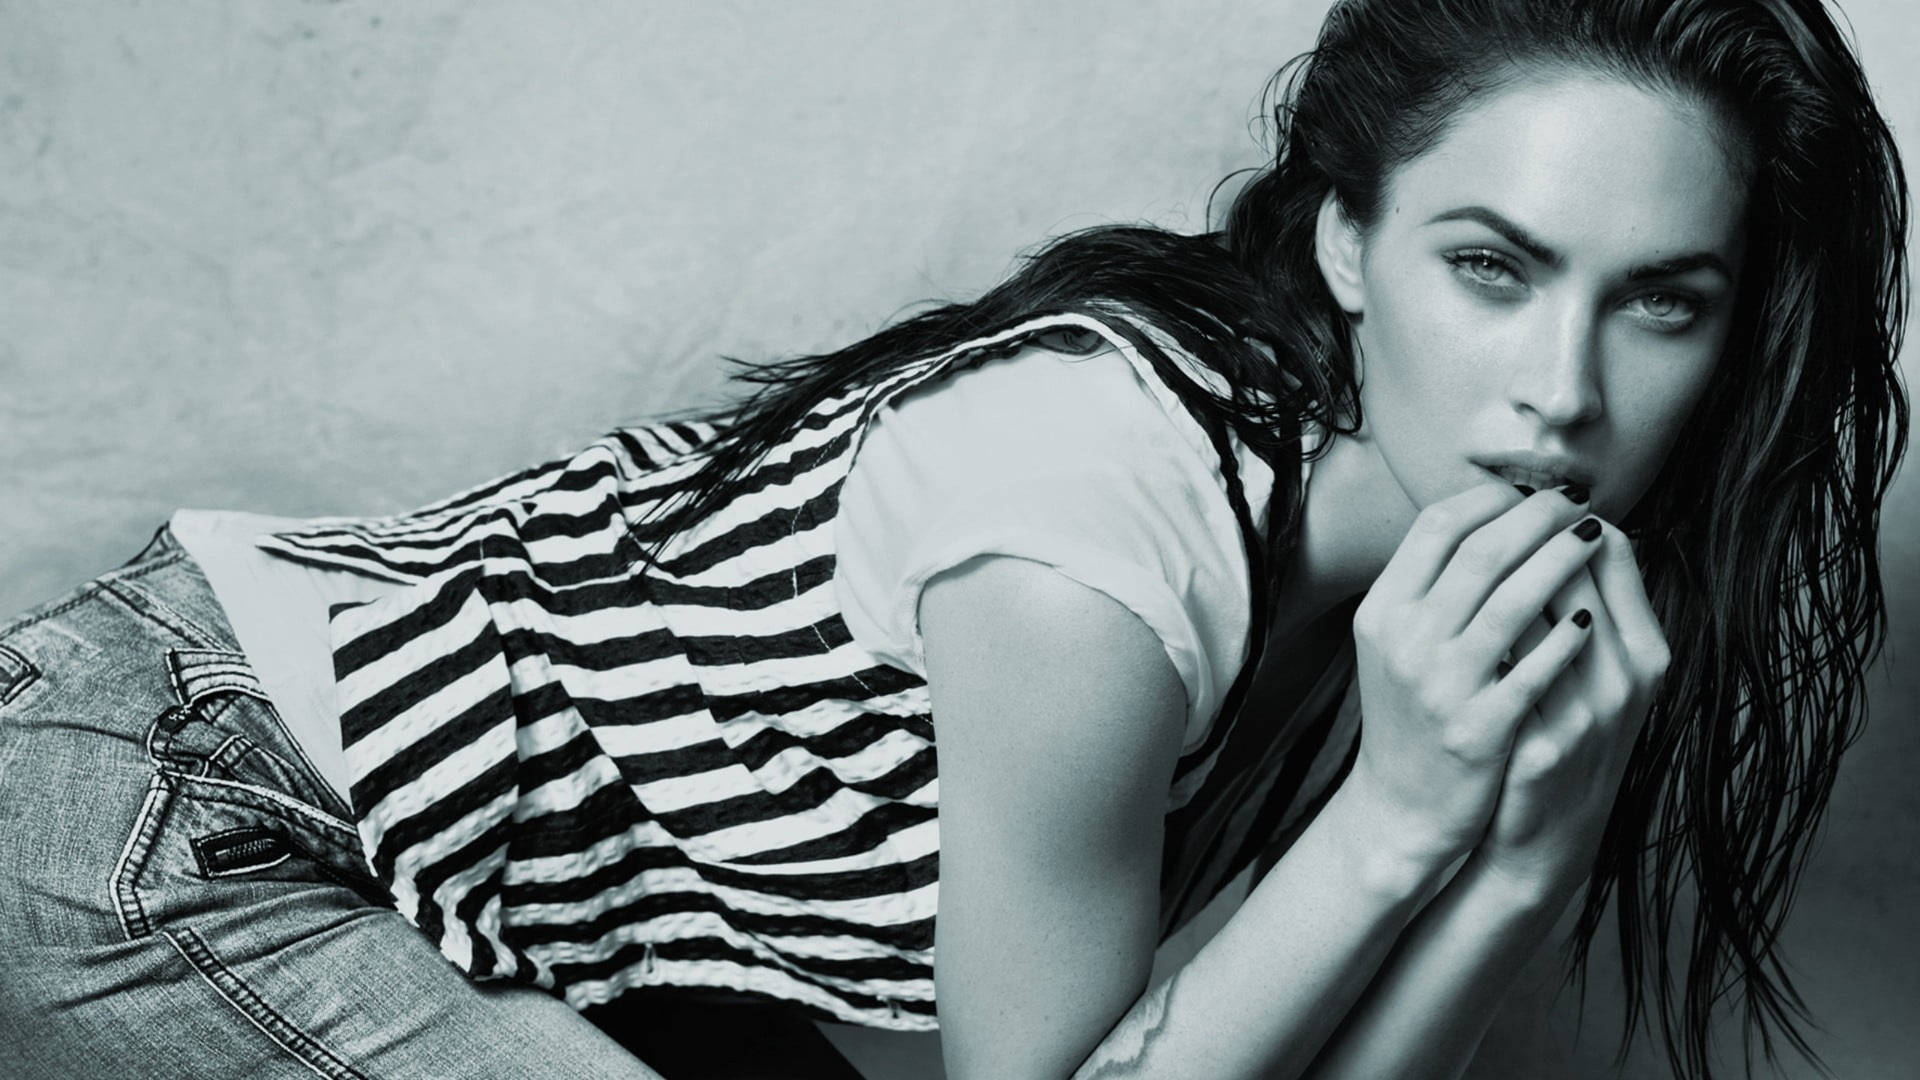 Megan Fox Looking Sophisticated In Monochrome.